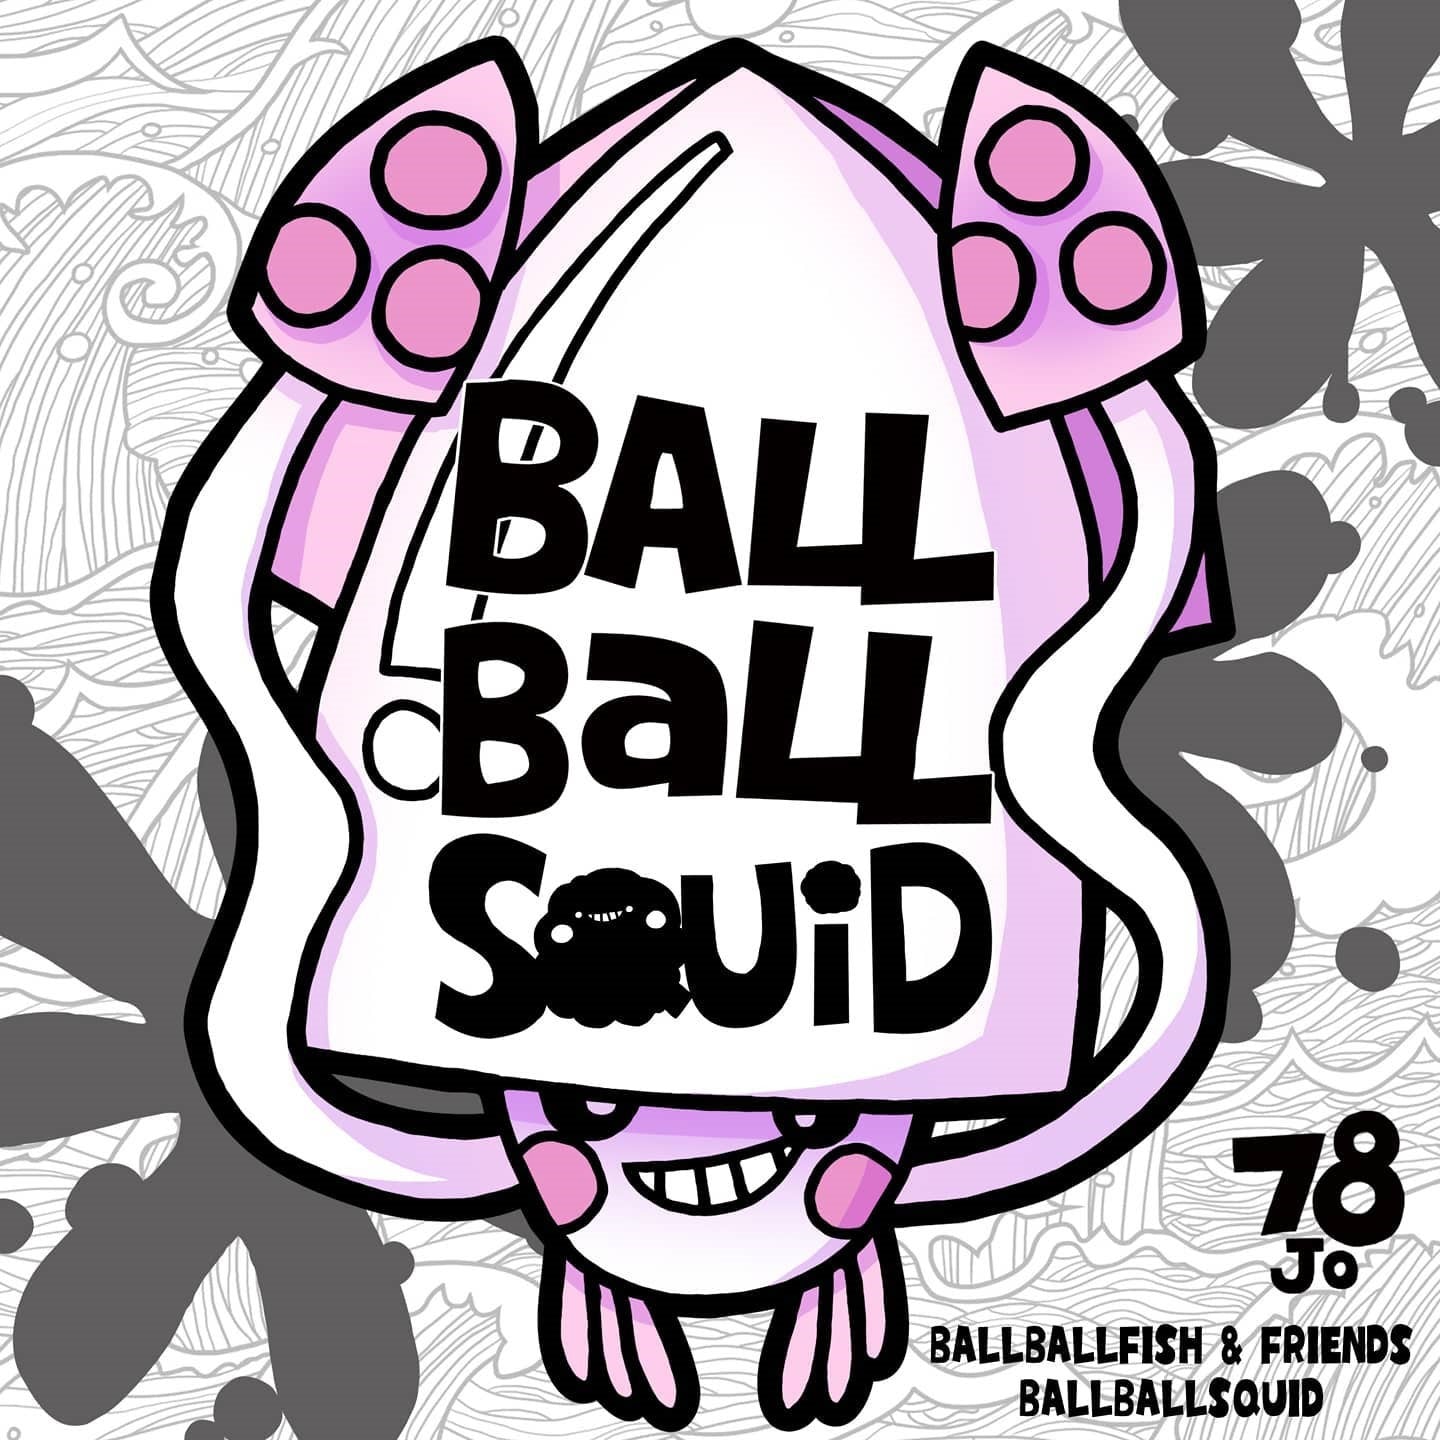 Ball Ball Squid by 78jo